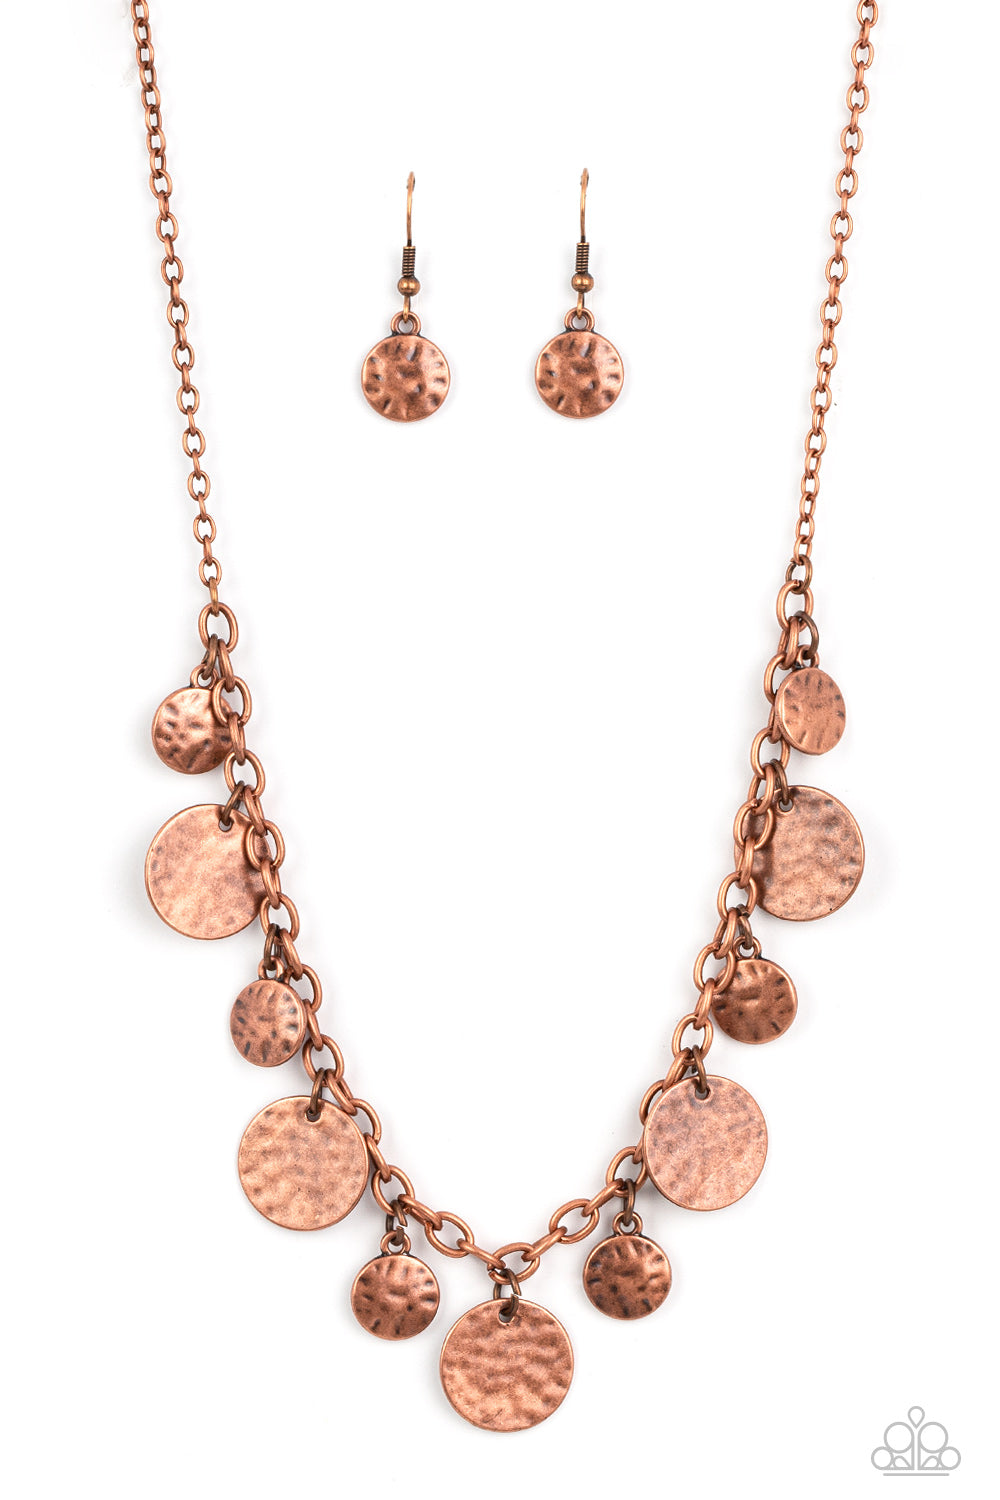 Model Medallions - Copper Fashion Necklace - Paparazzi Accessories